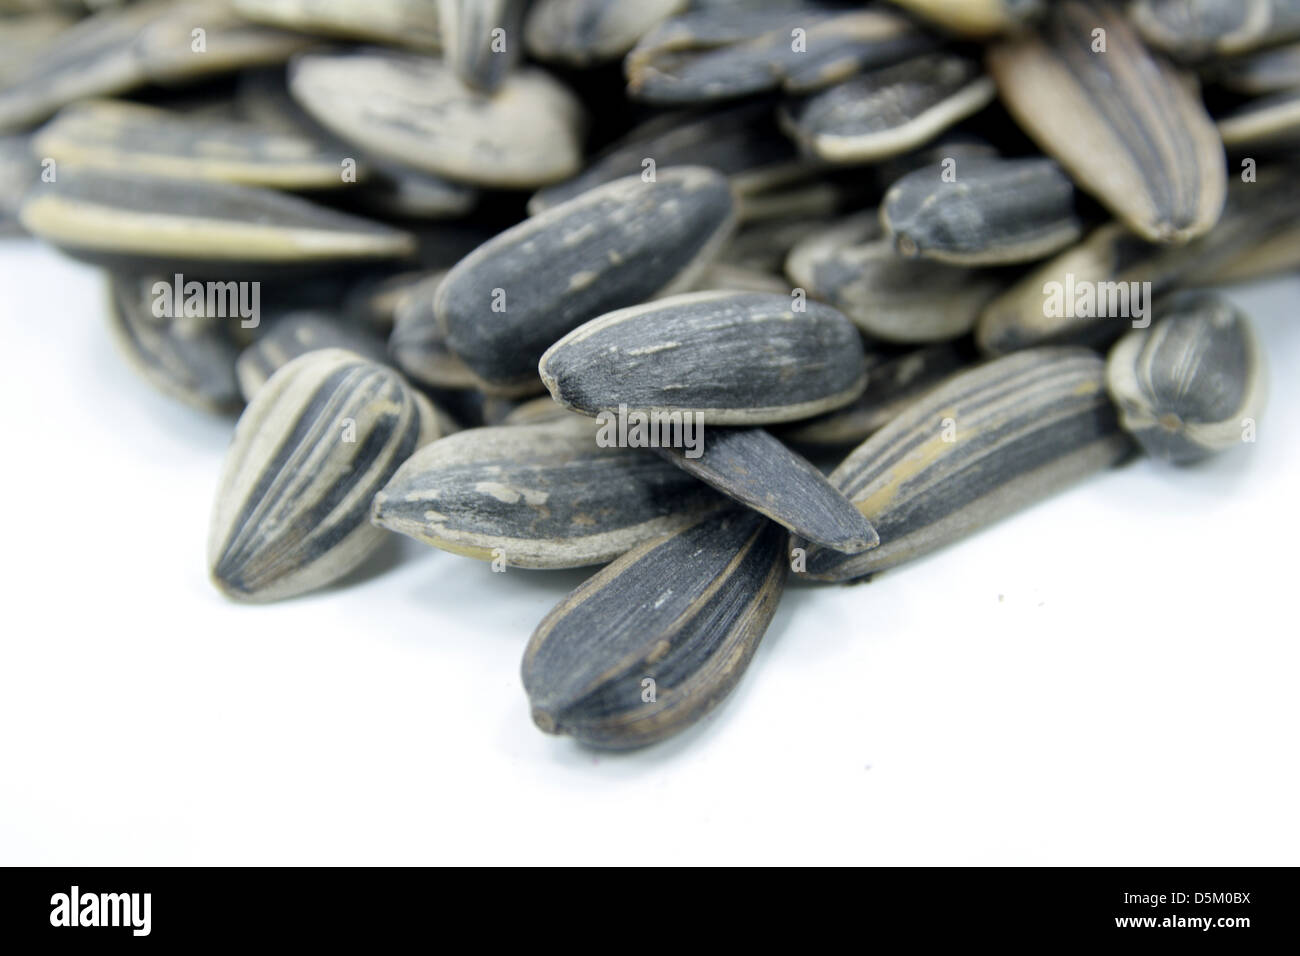 sunflower seeds Stock Photo